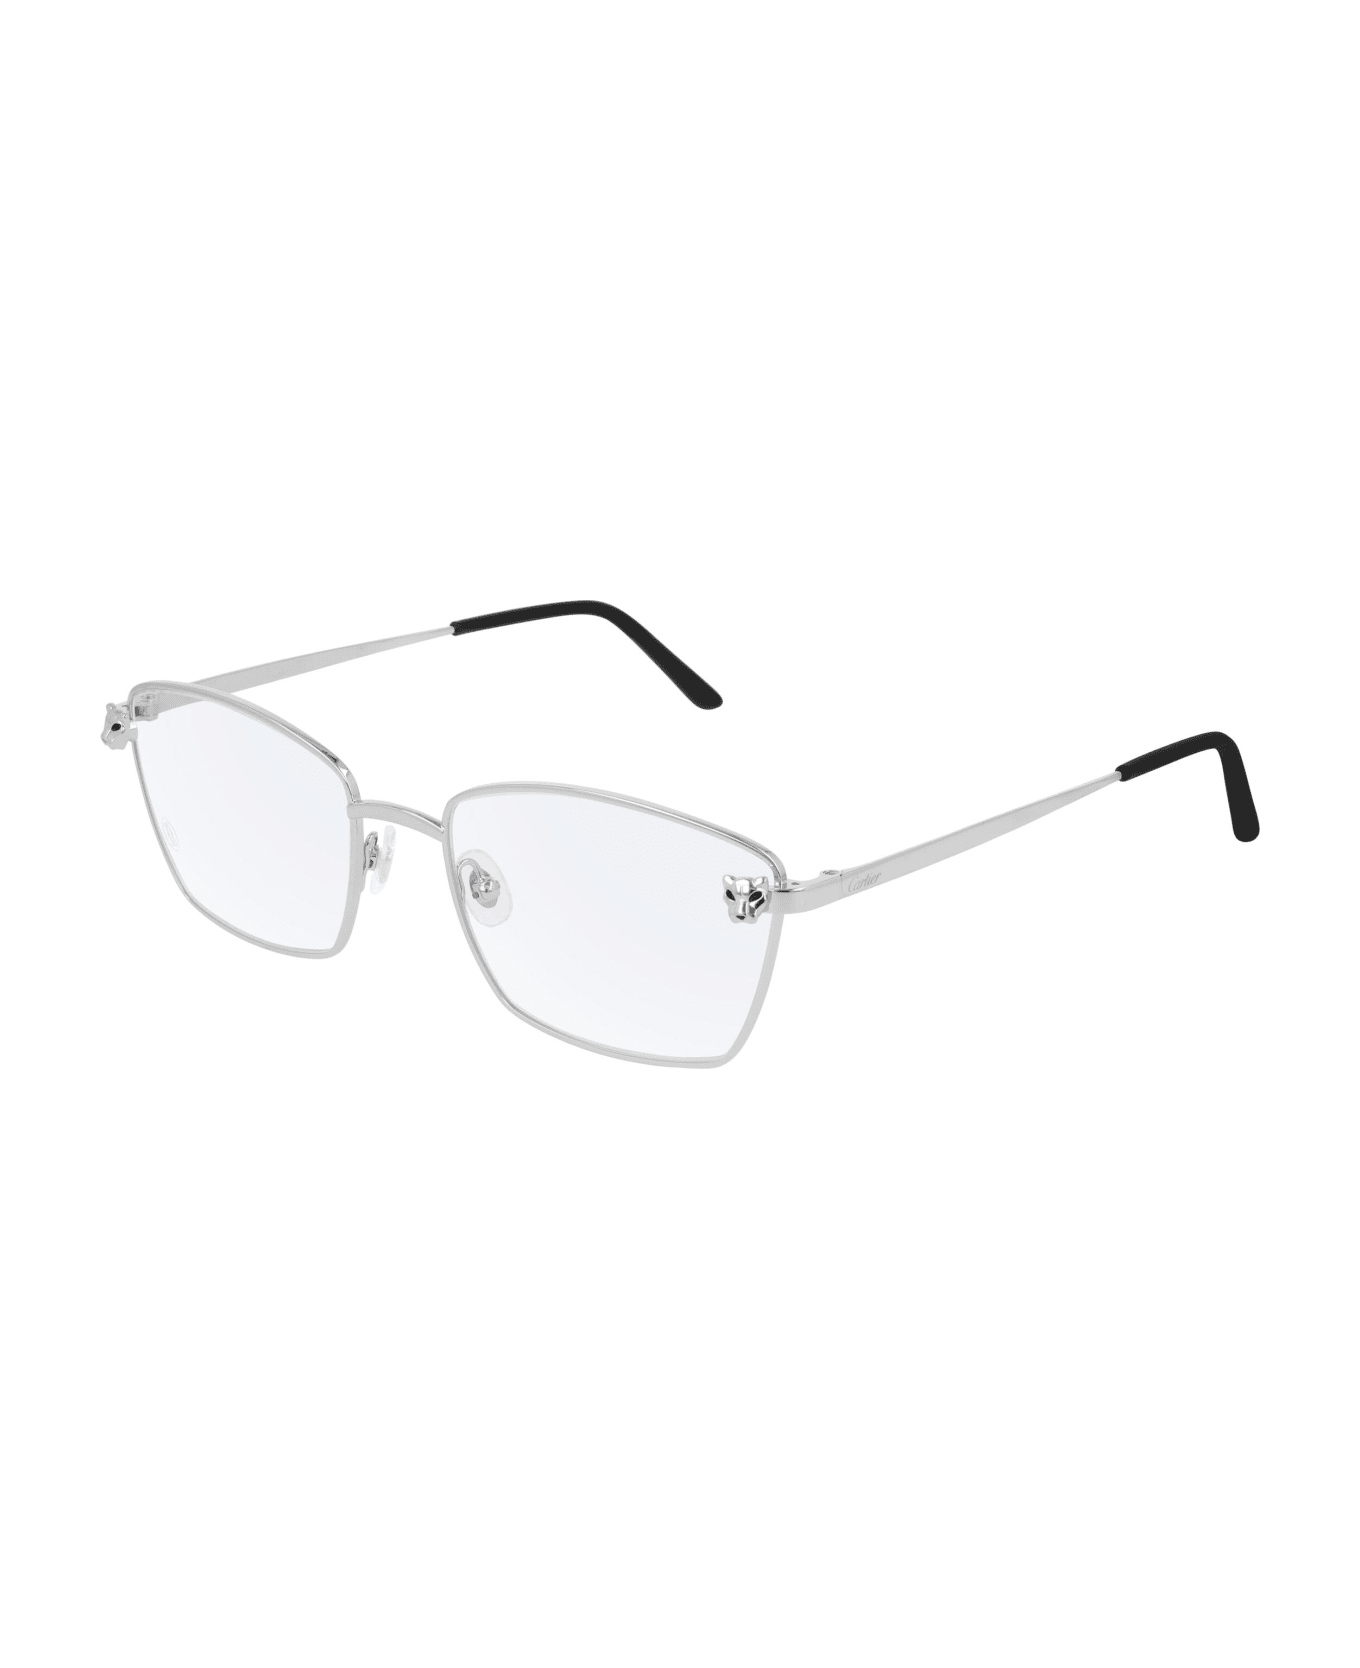 Cartier Eyewear Glasses - Argento